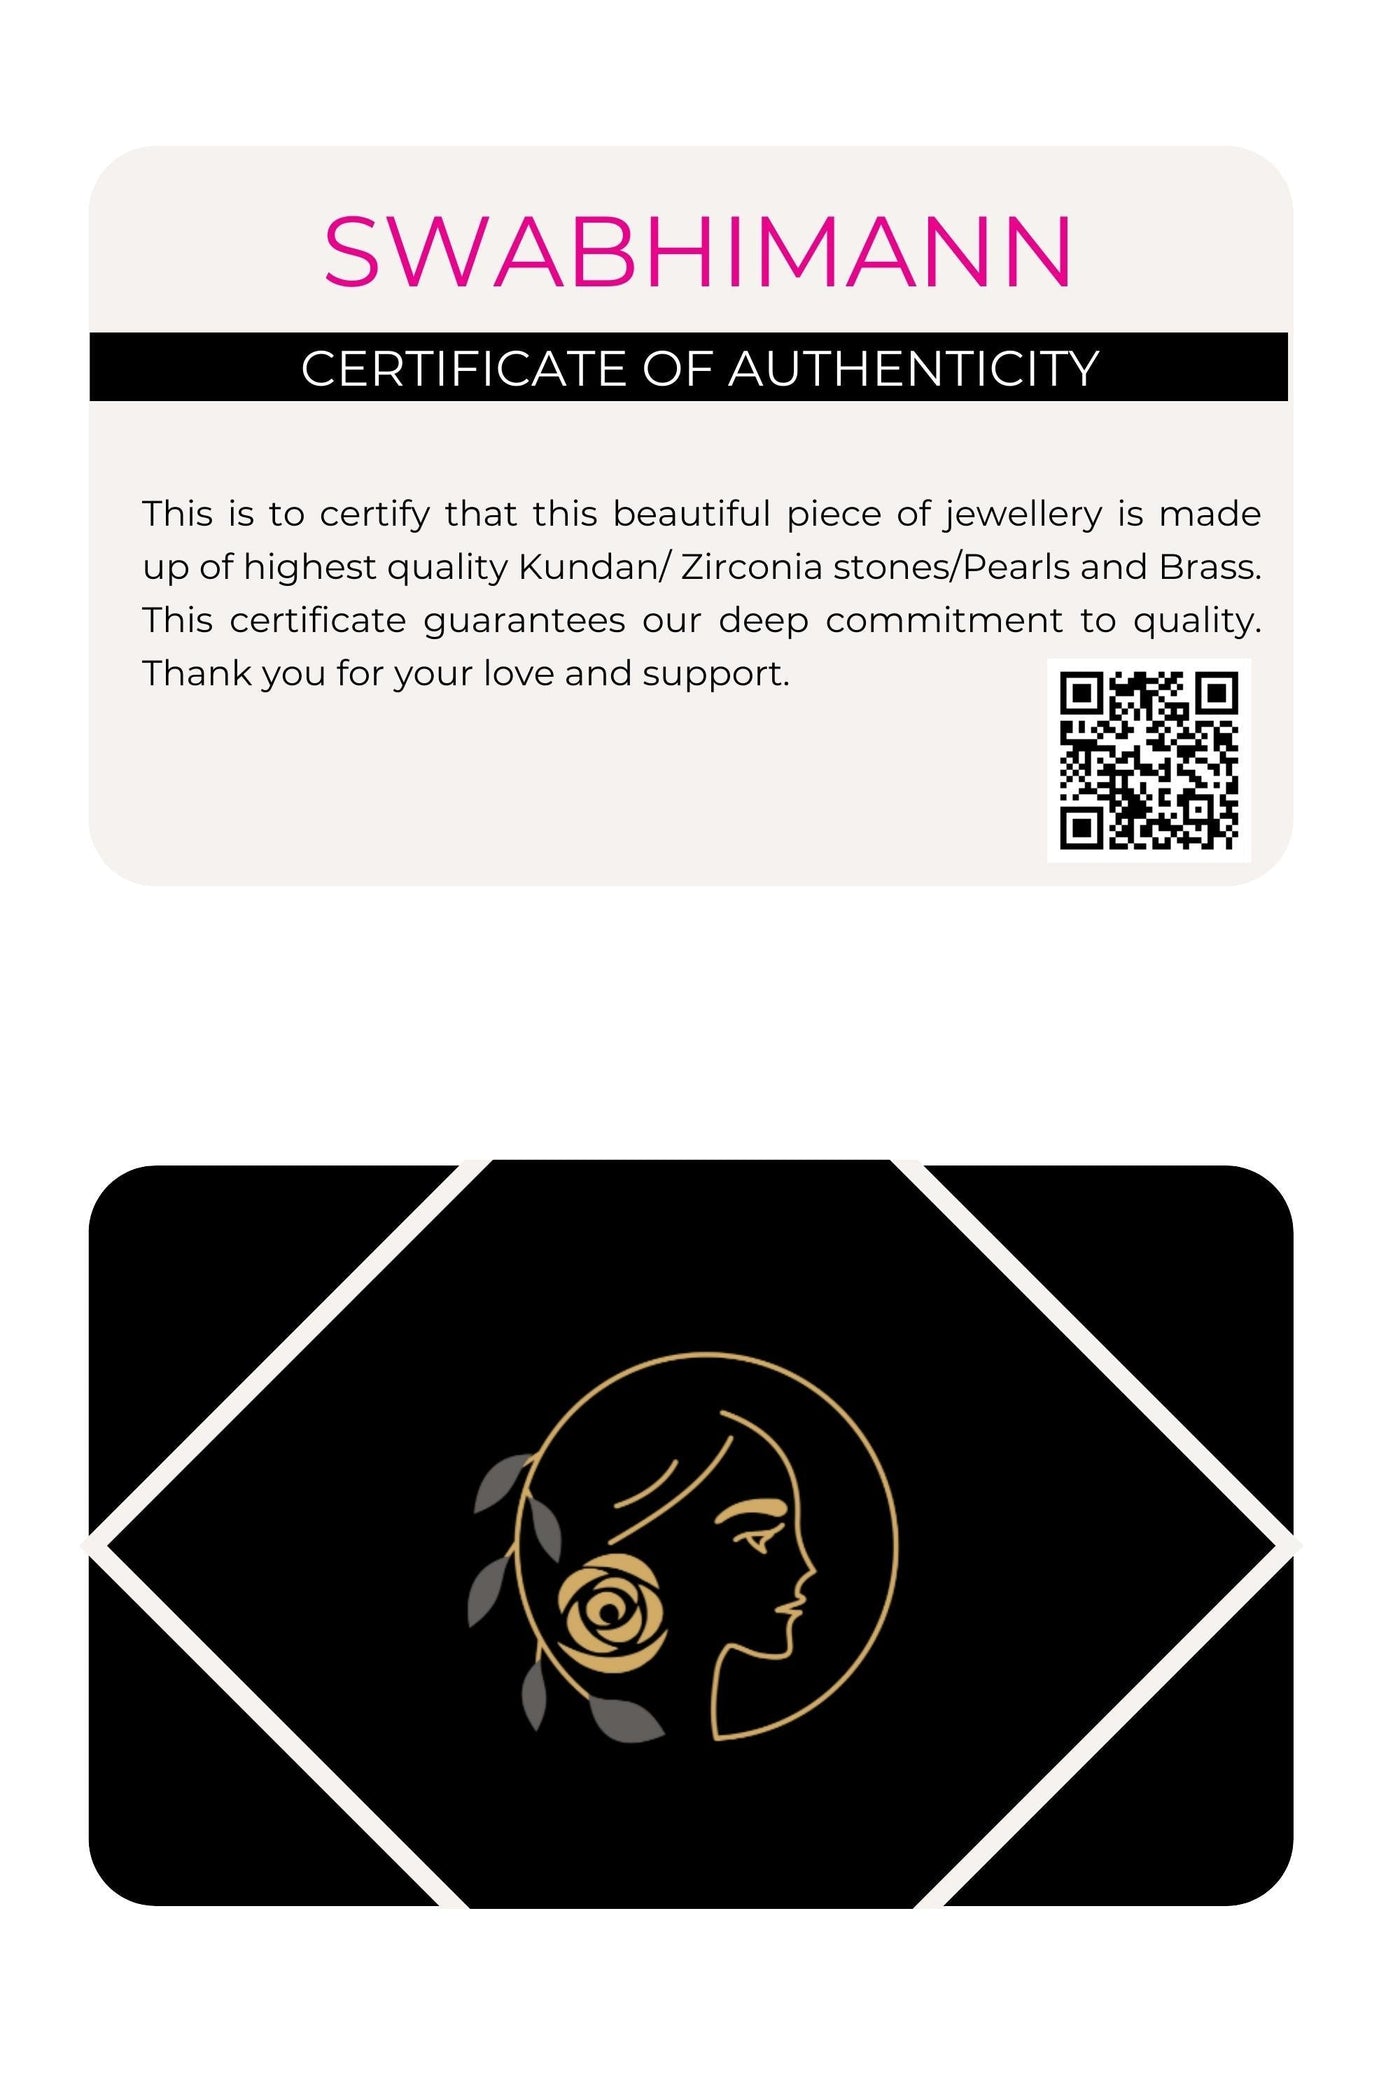 Swabhimann Jewellery Certificate of Authenticity